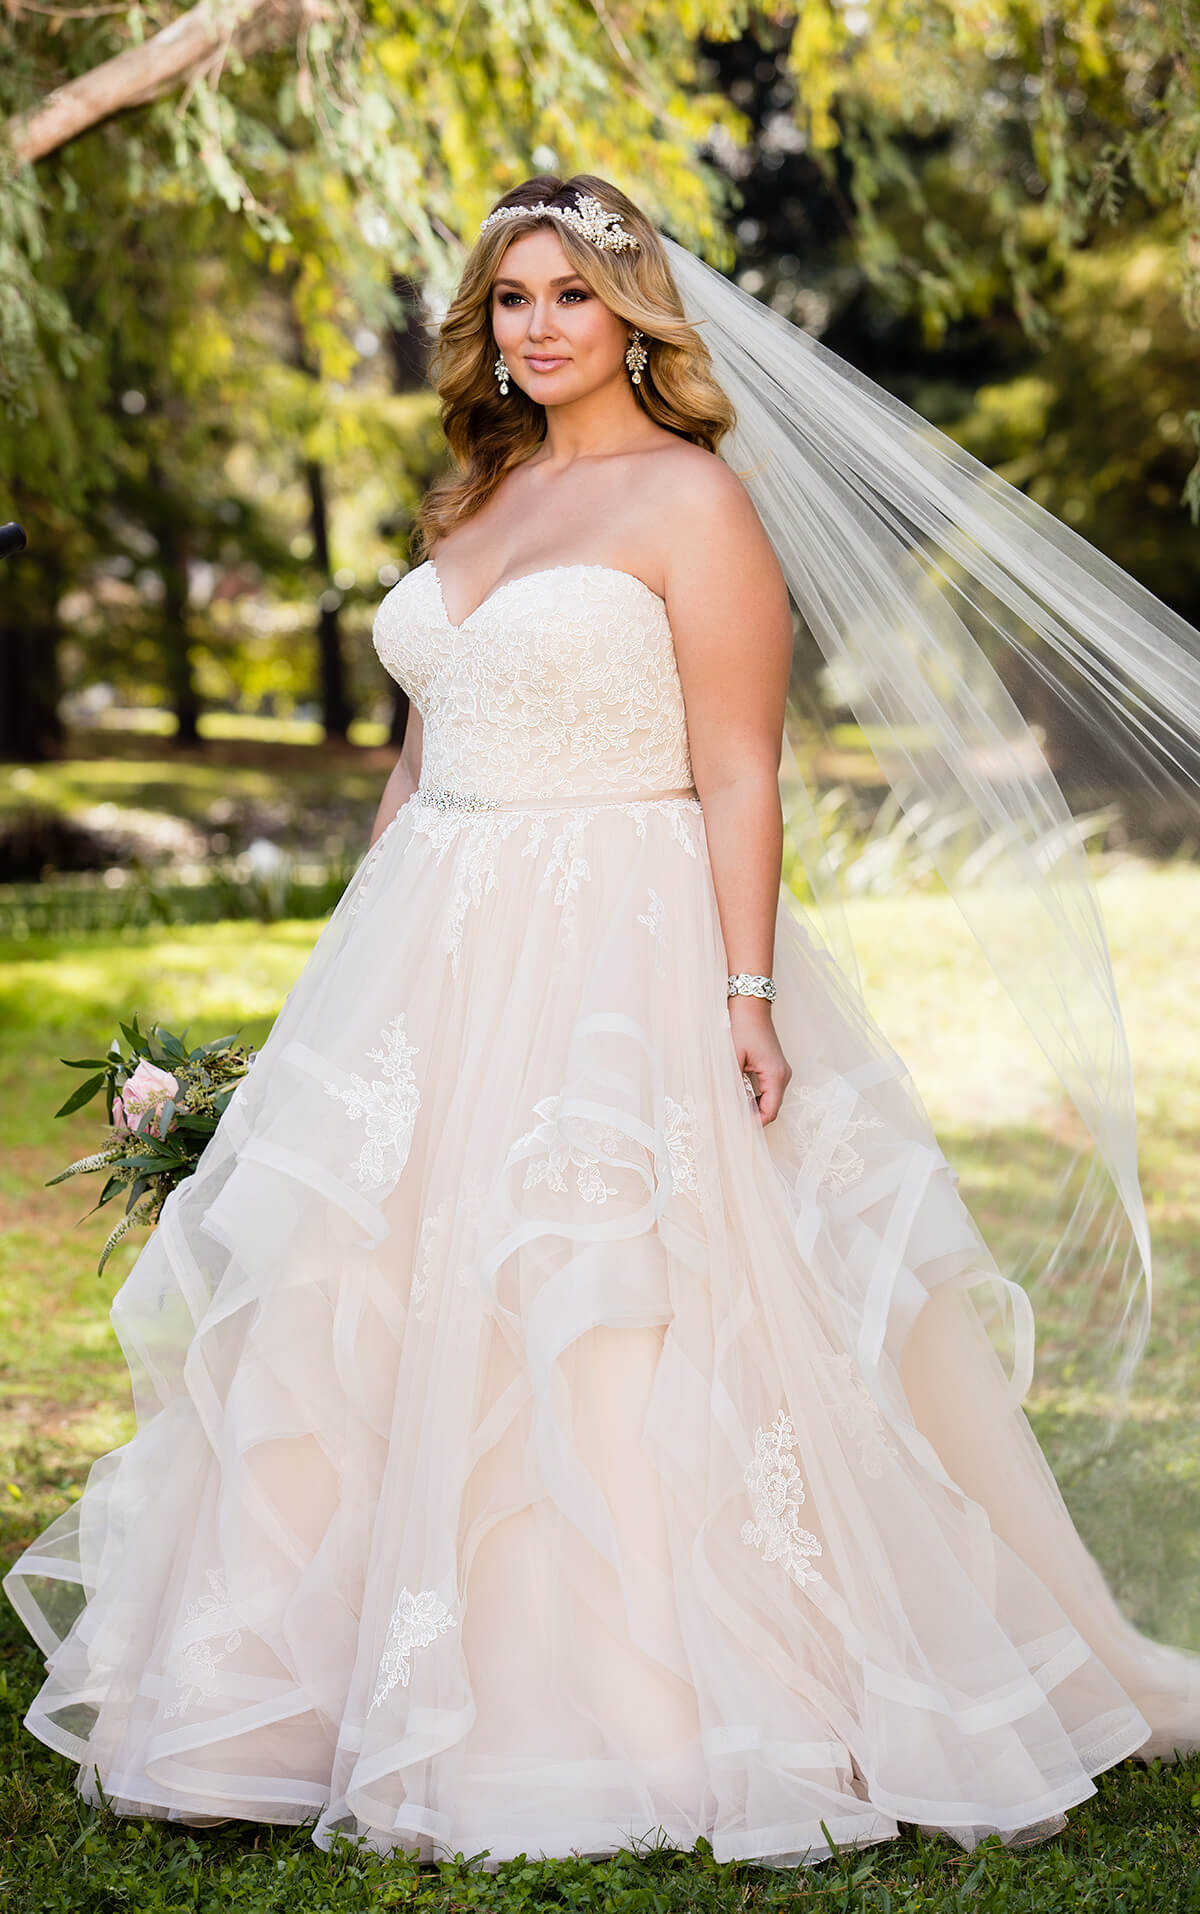 plus-sized bride in blush-colored dress